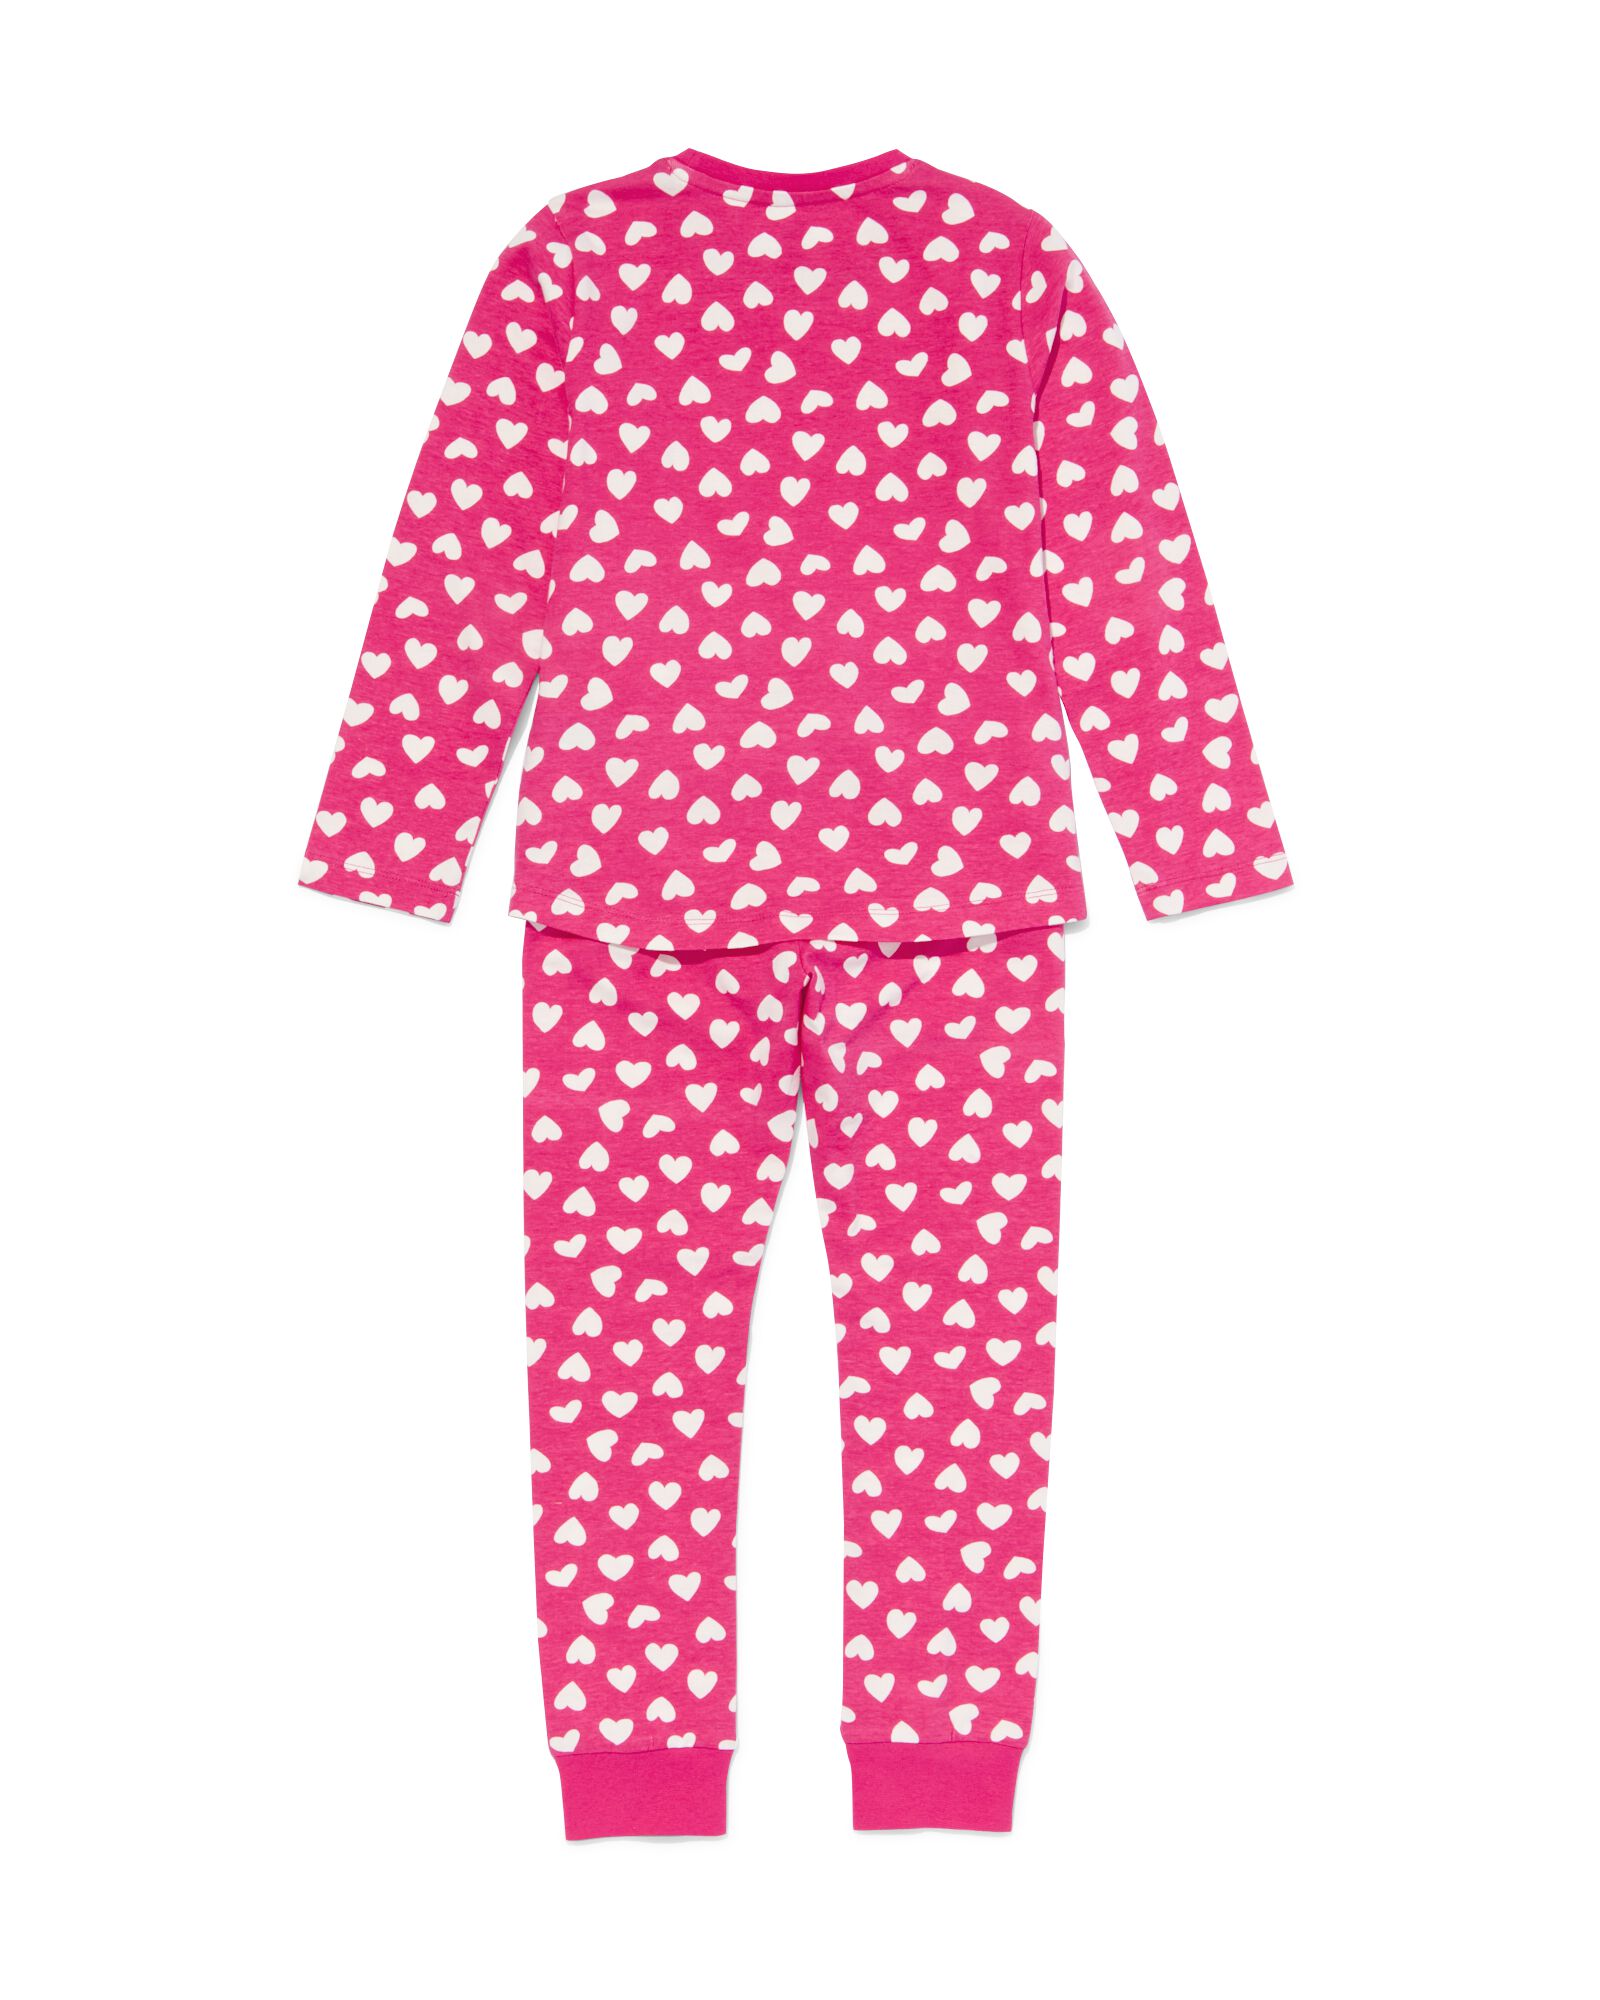 Kinder-Pyjama, Herzen knallrosa 110/116 - 23092783 - HEMA